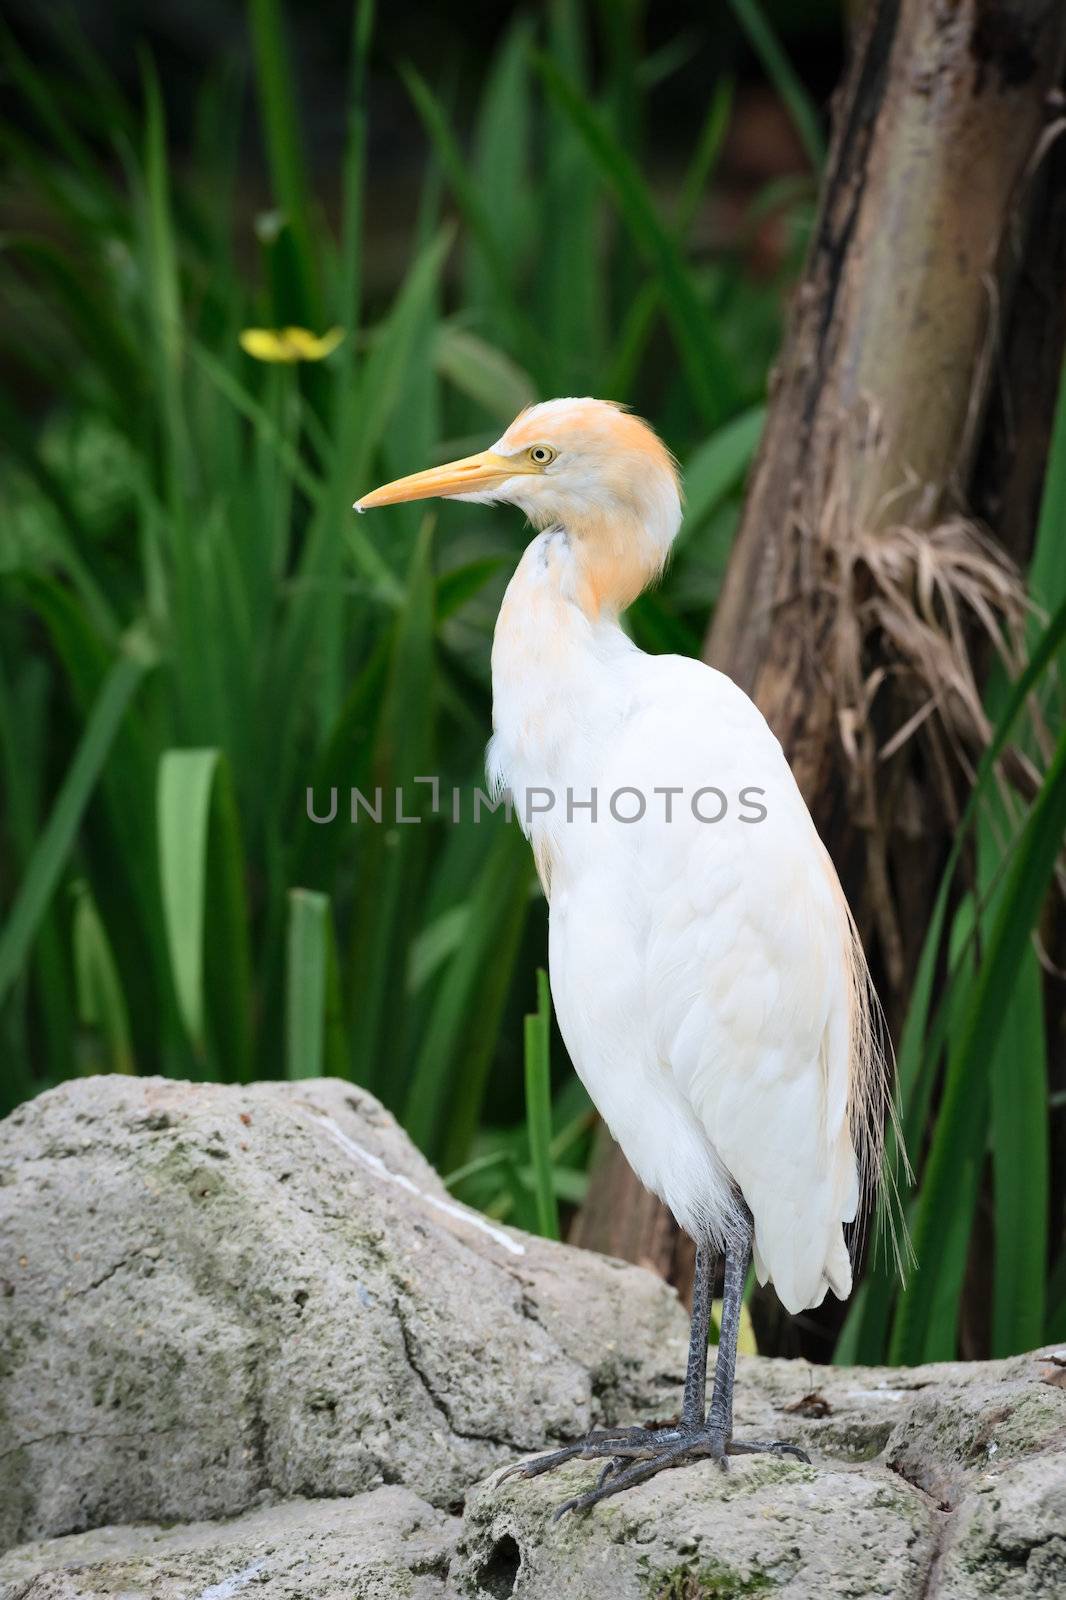 Cattle Egret in nature by iryna_rasko